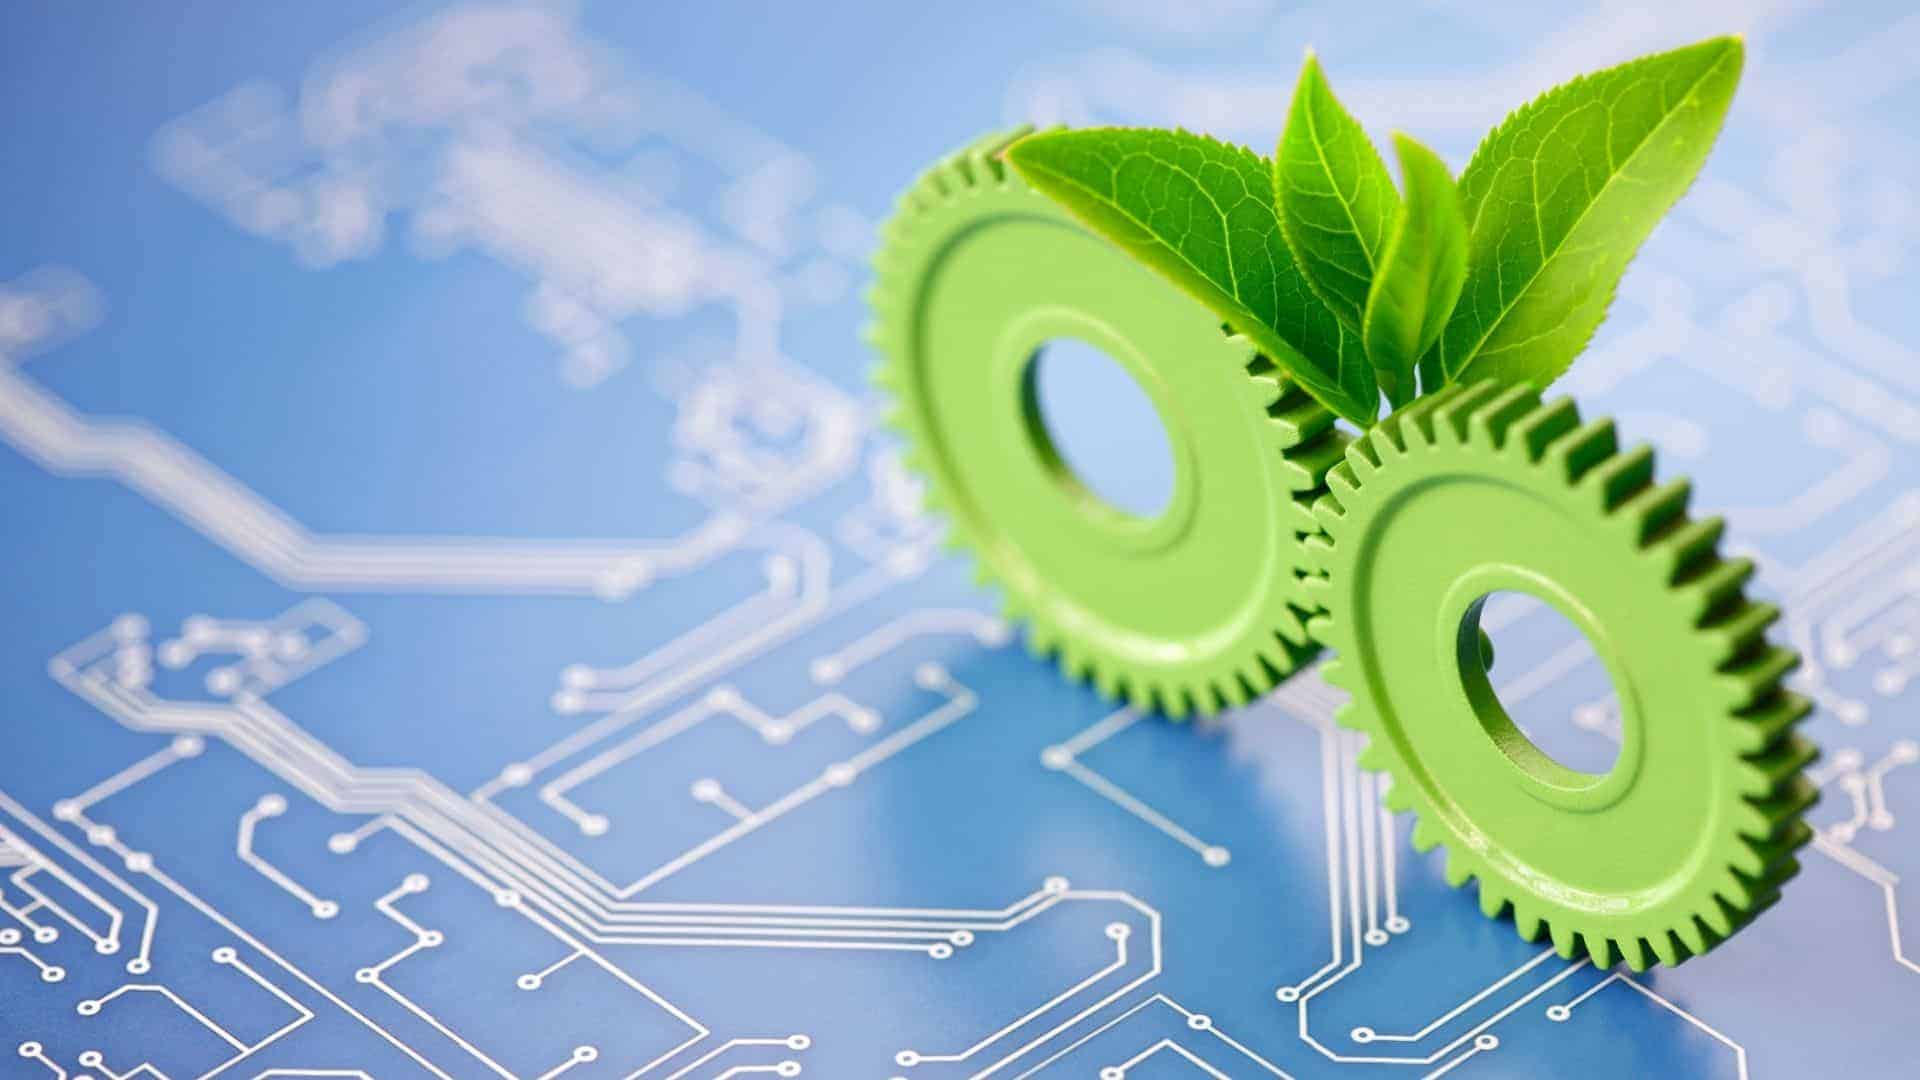 Clean technology. Зеленые технологии. "Зеленые" технологии для бизнеса. Зеленые технологии картинки. Зеленые технологии вектор.